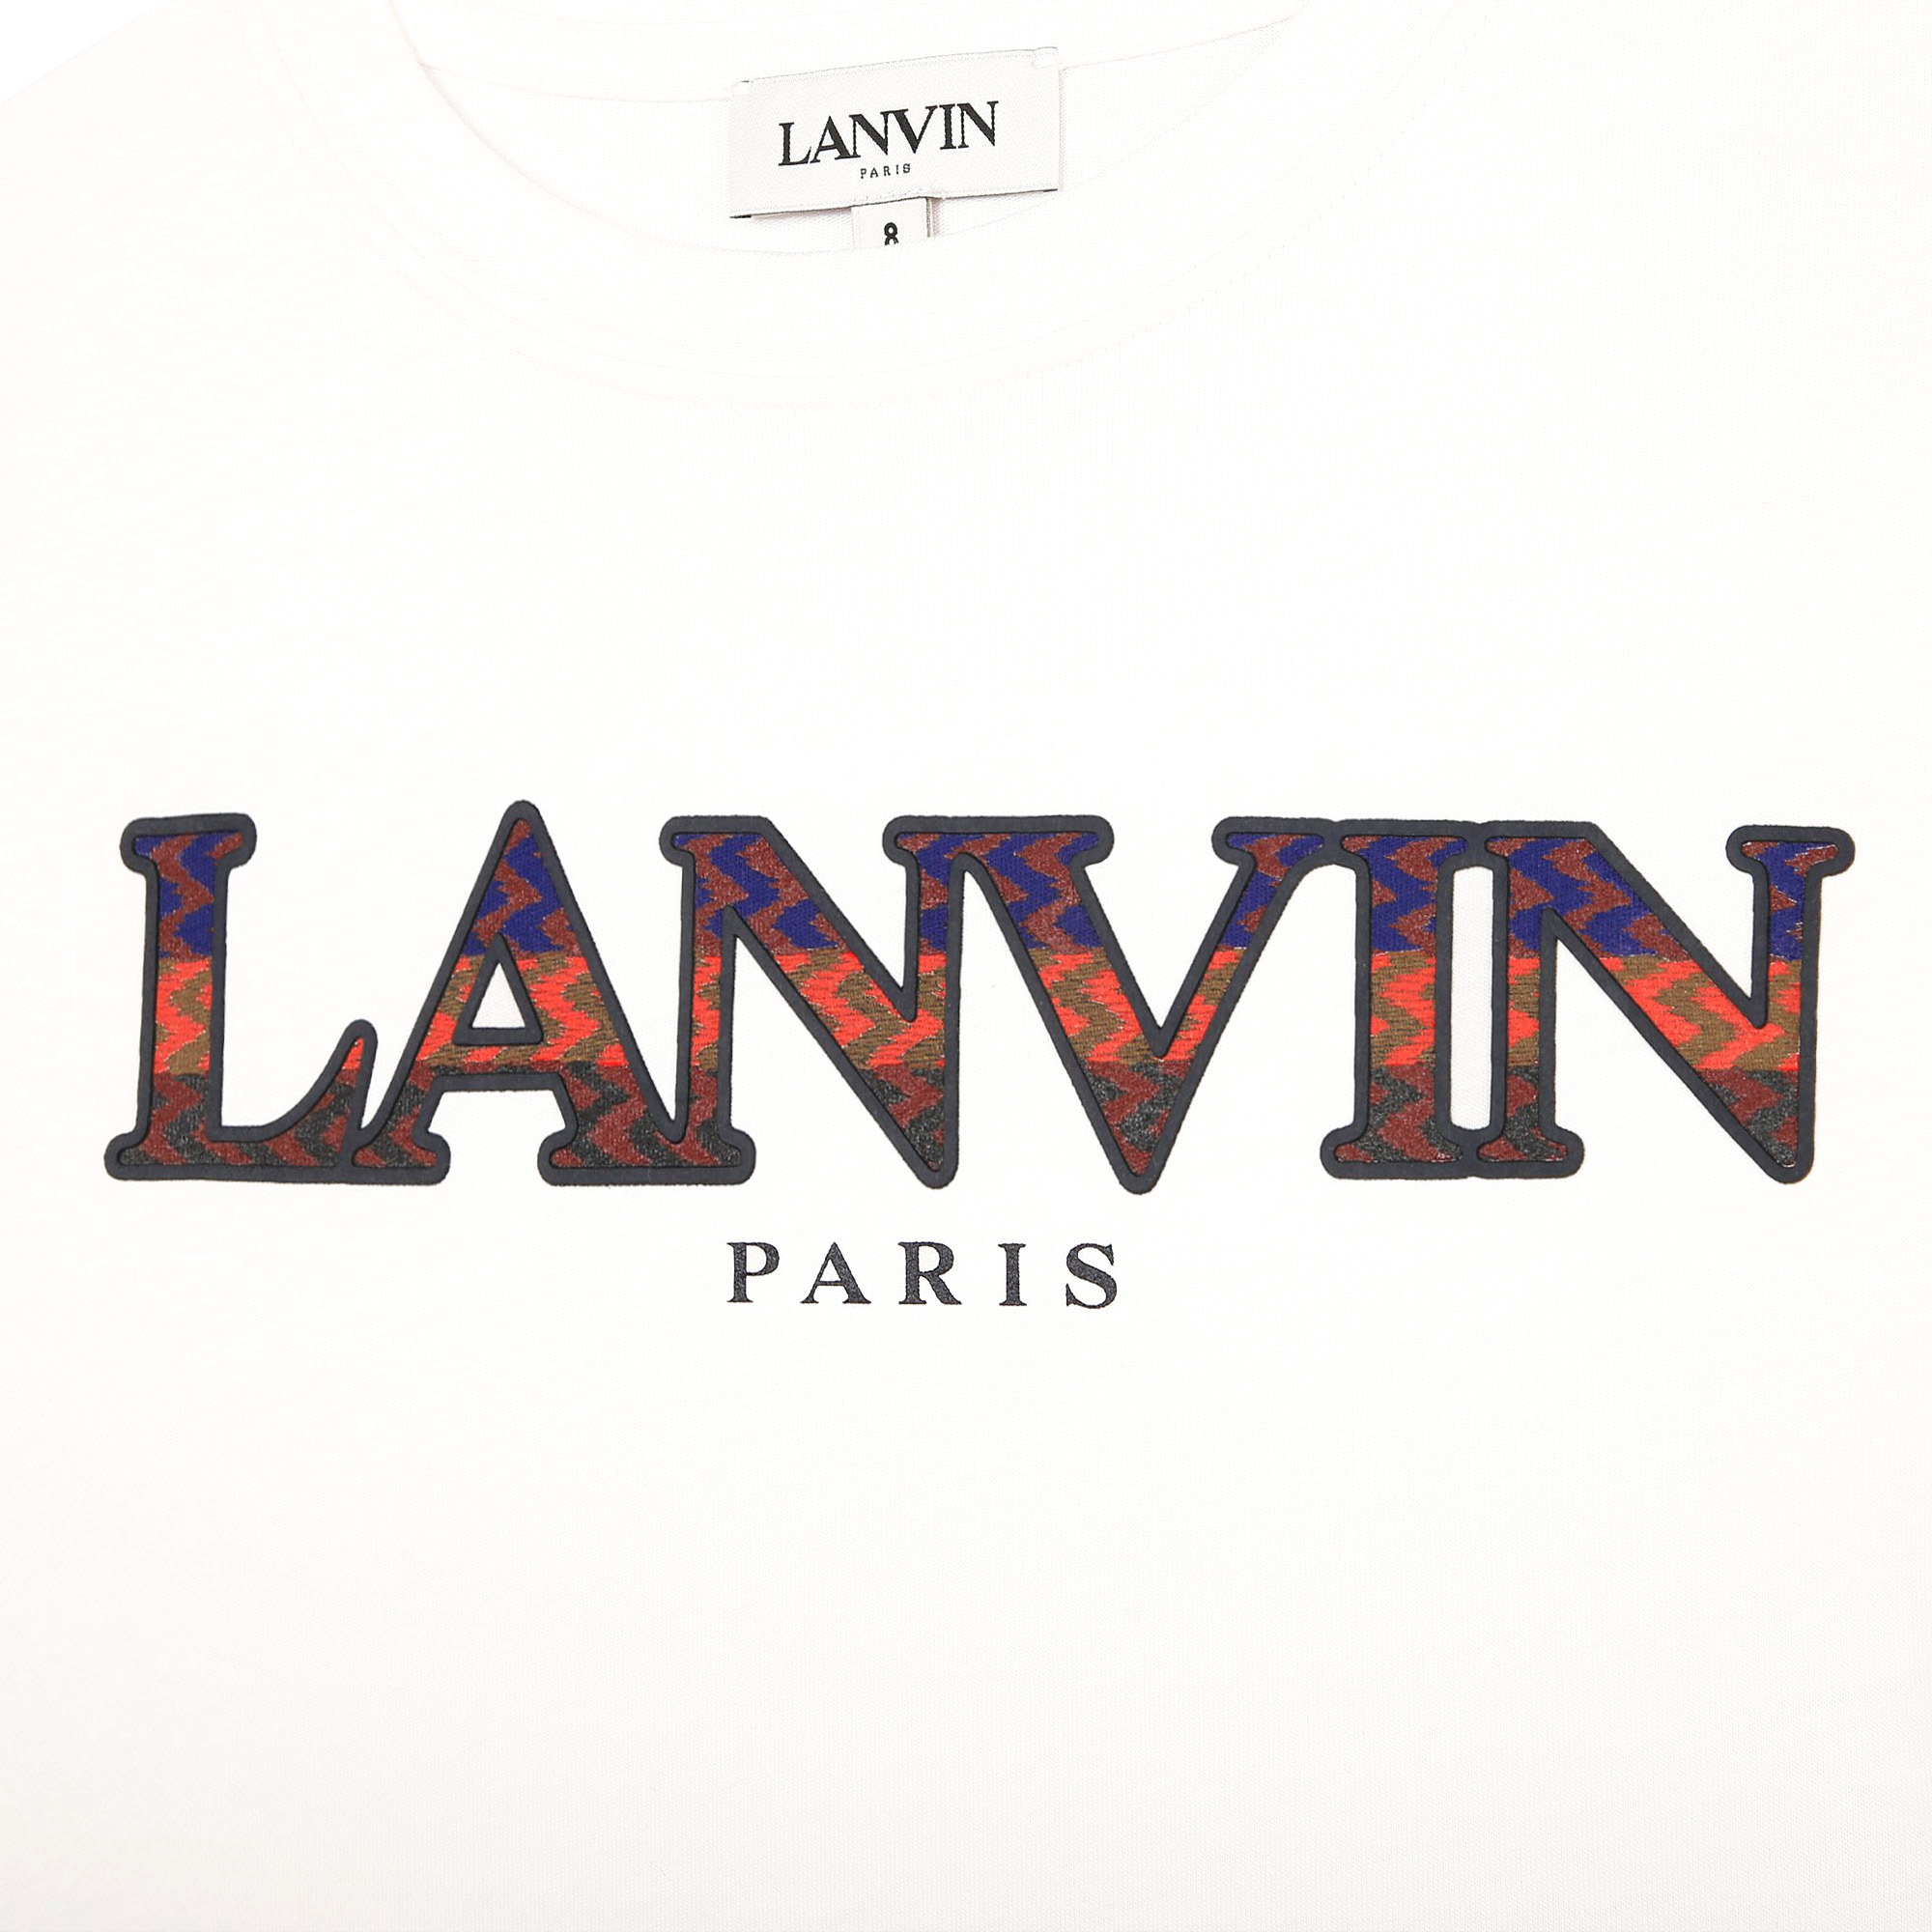 Colourful logo T-shirt LANVIN for BOY